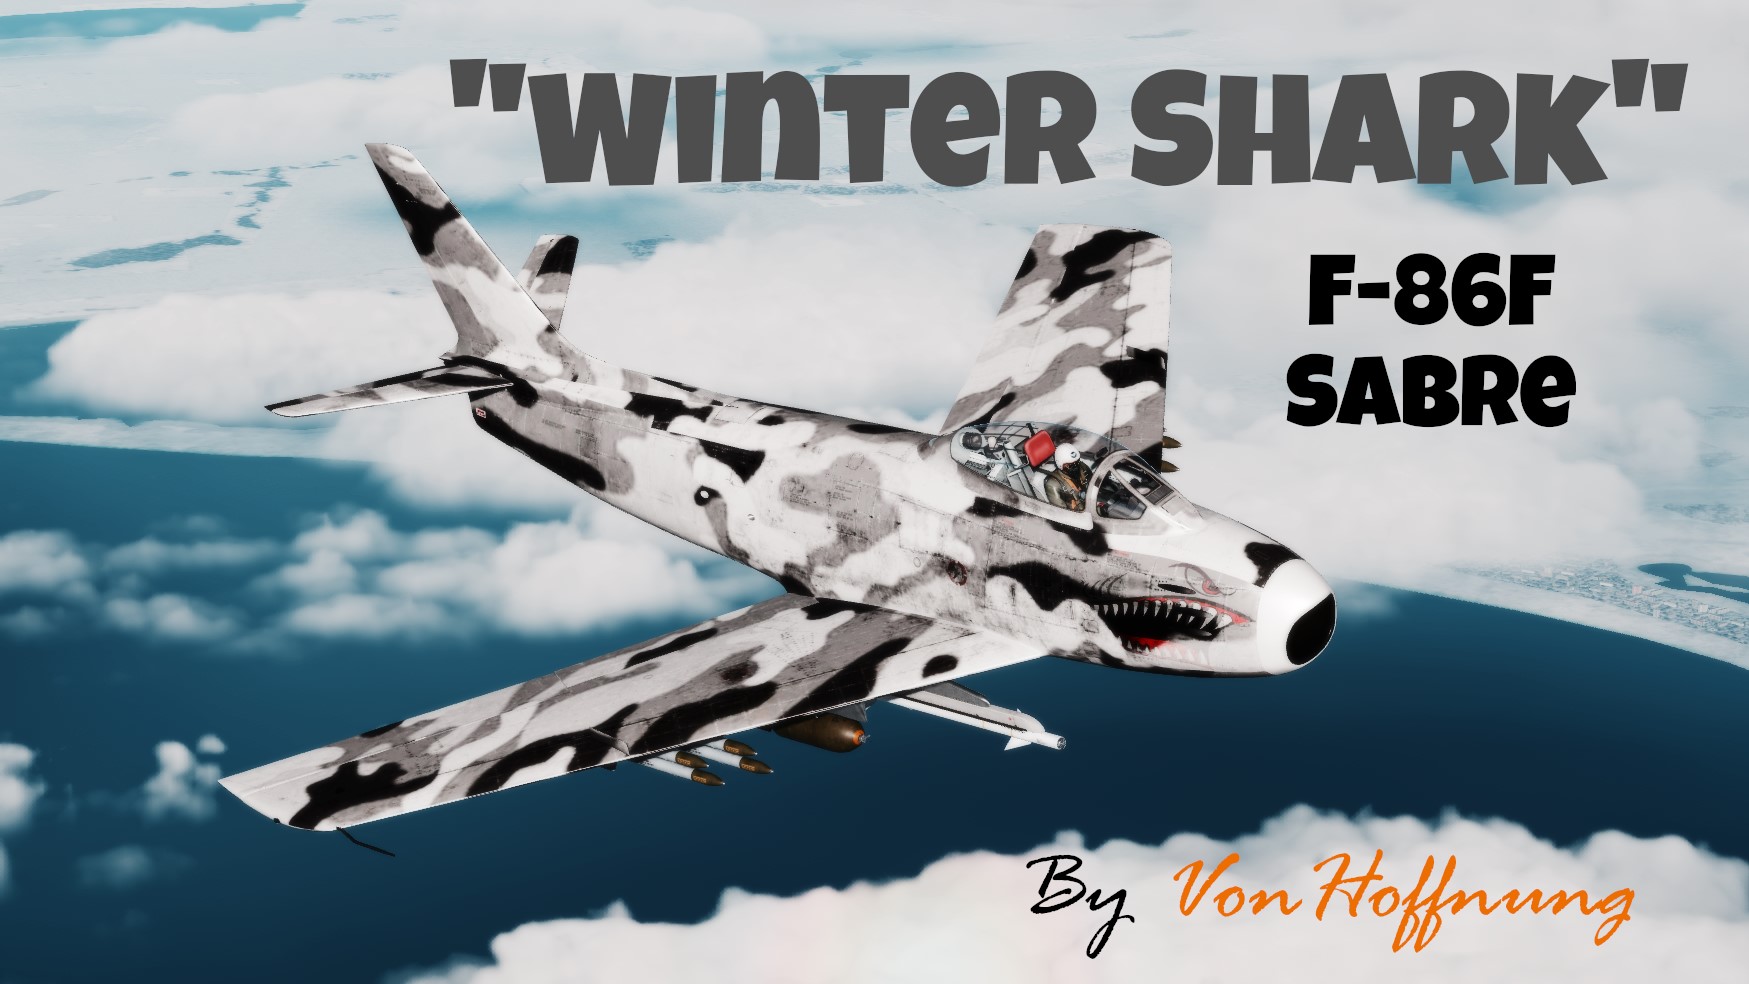 F-86F Sabre "Winter Shark" Livery